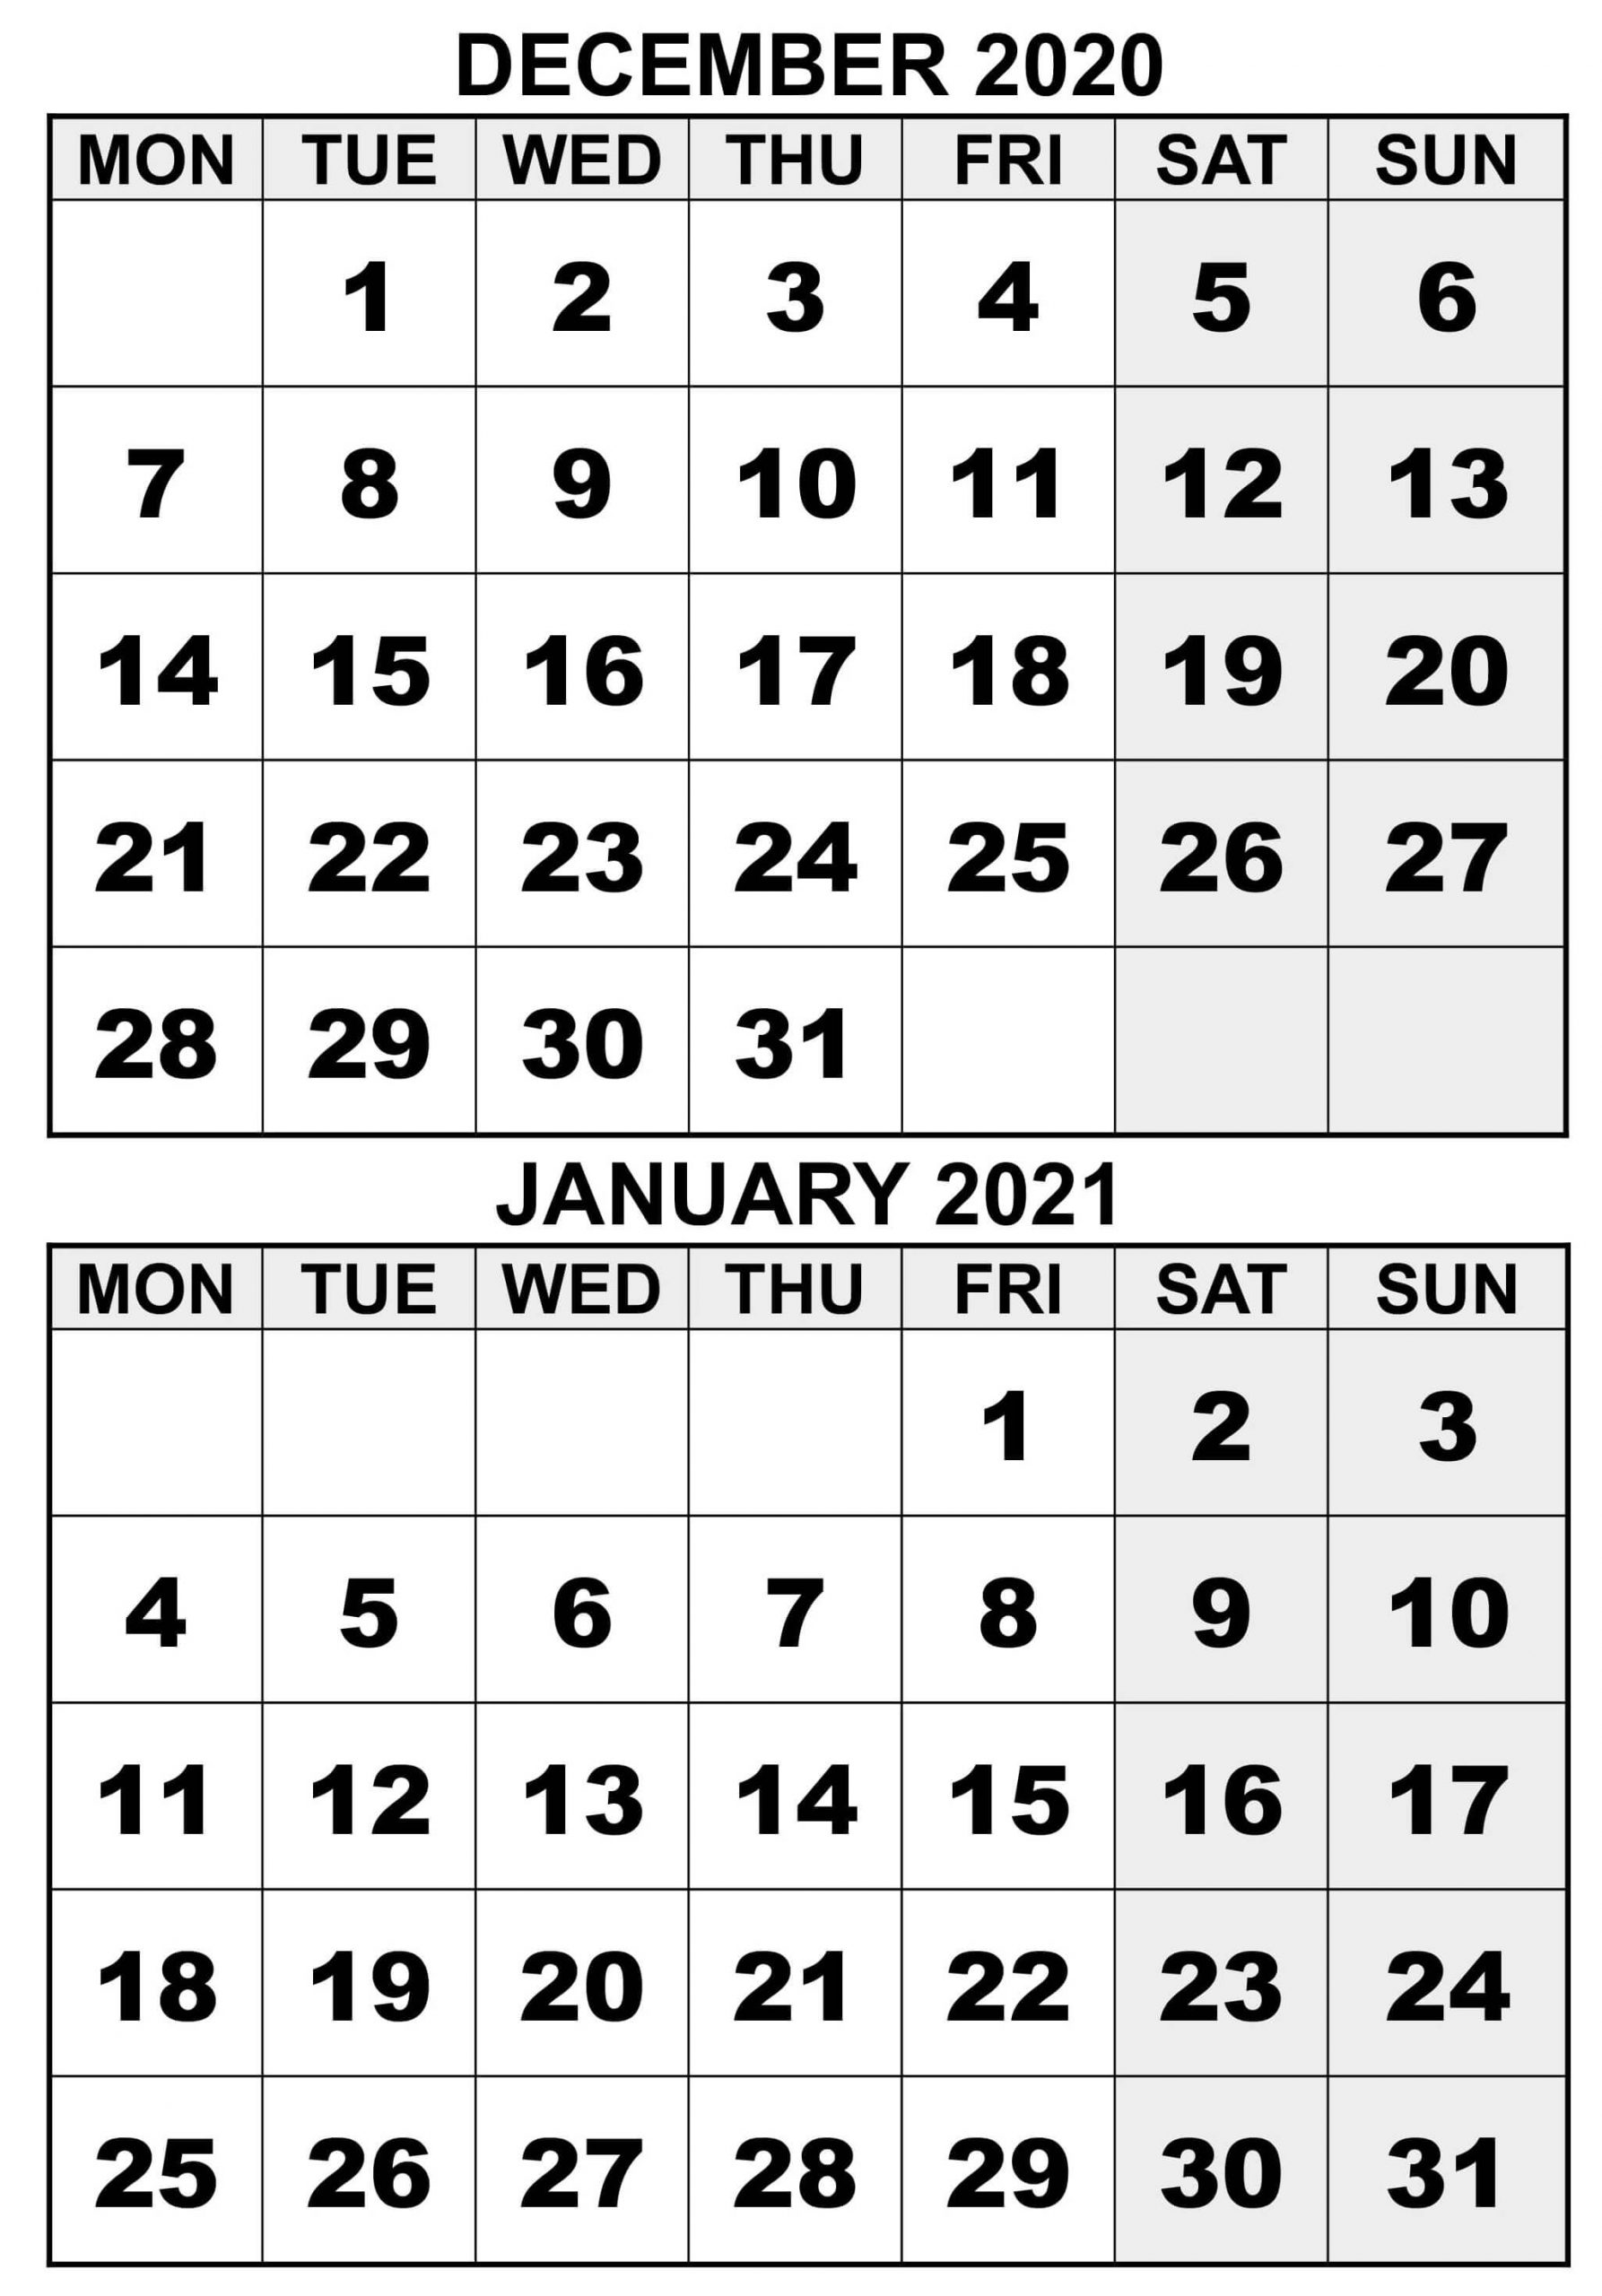 Blank 2020 December 2021 January Calendar With Holidays Calendar For December 2020 And January 2021